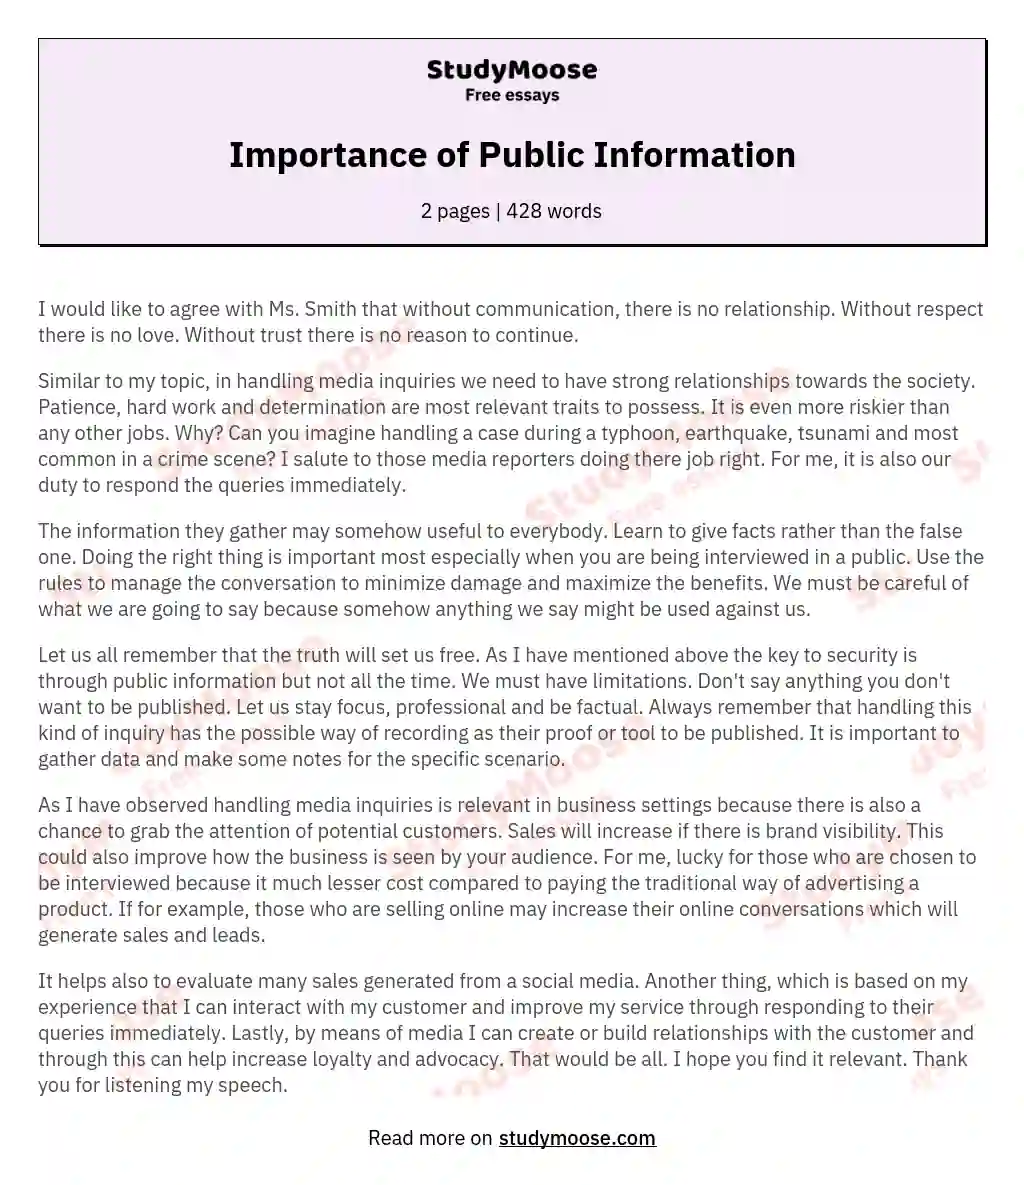 Importance of Public Information essay